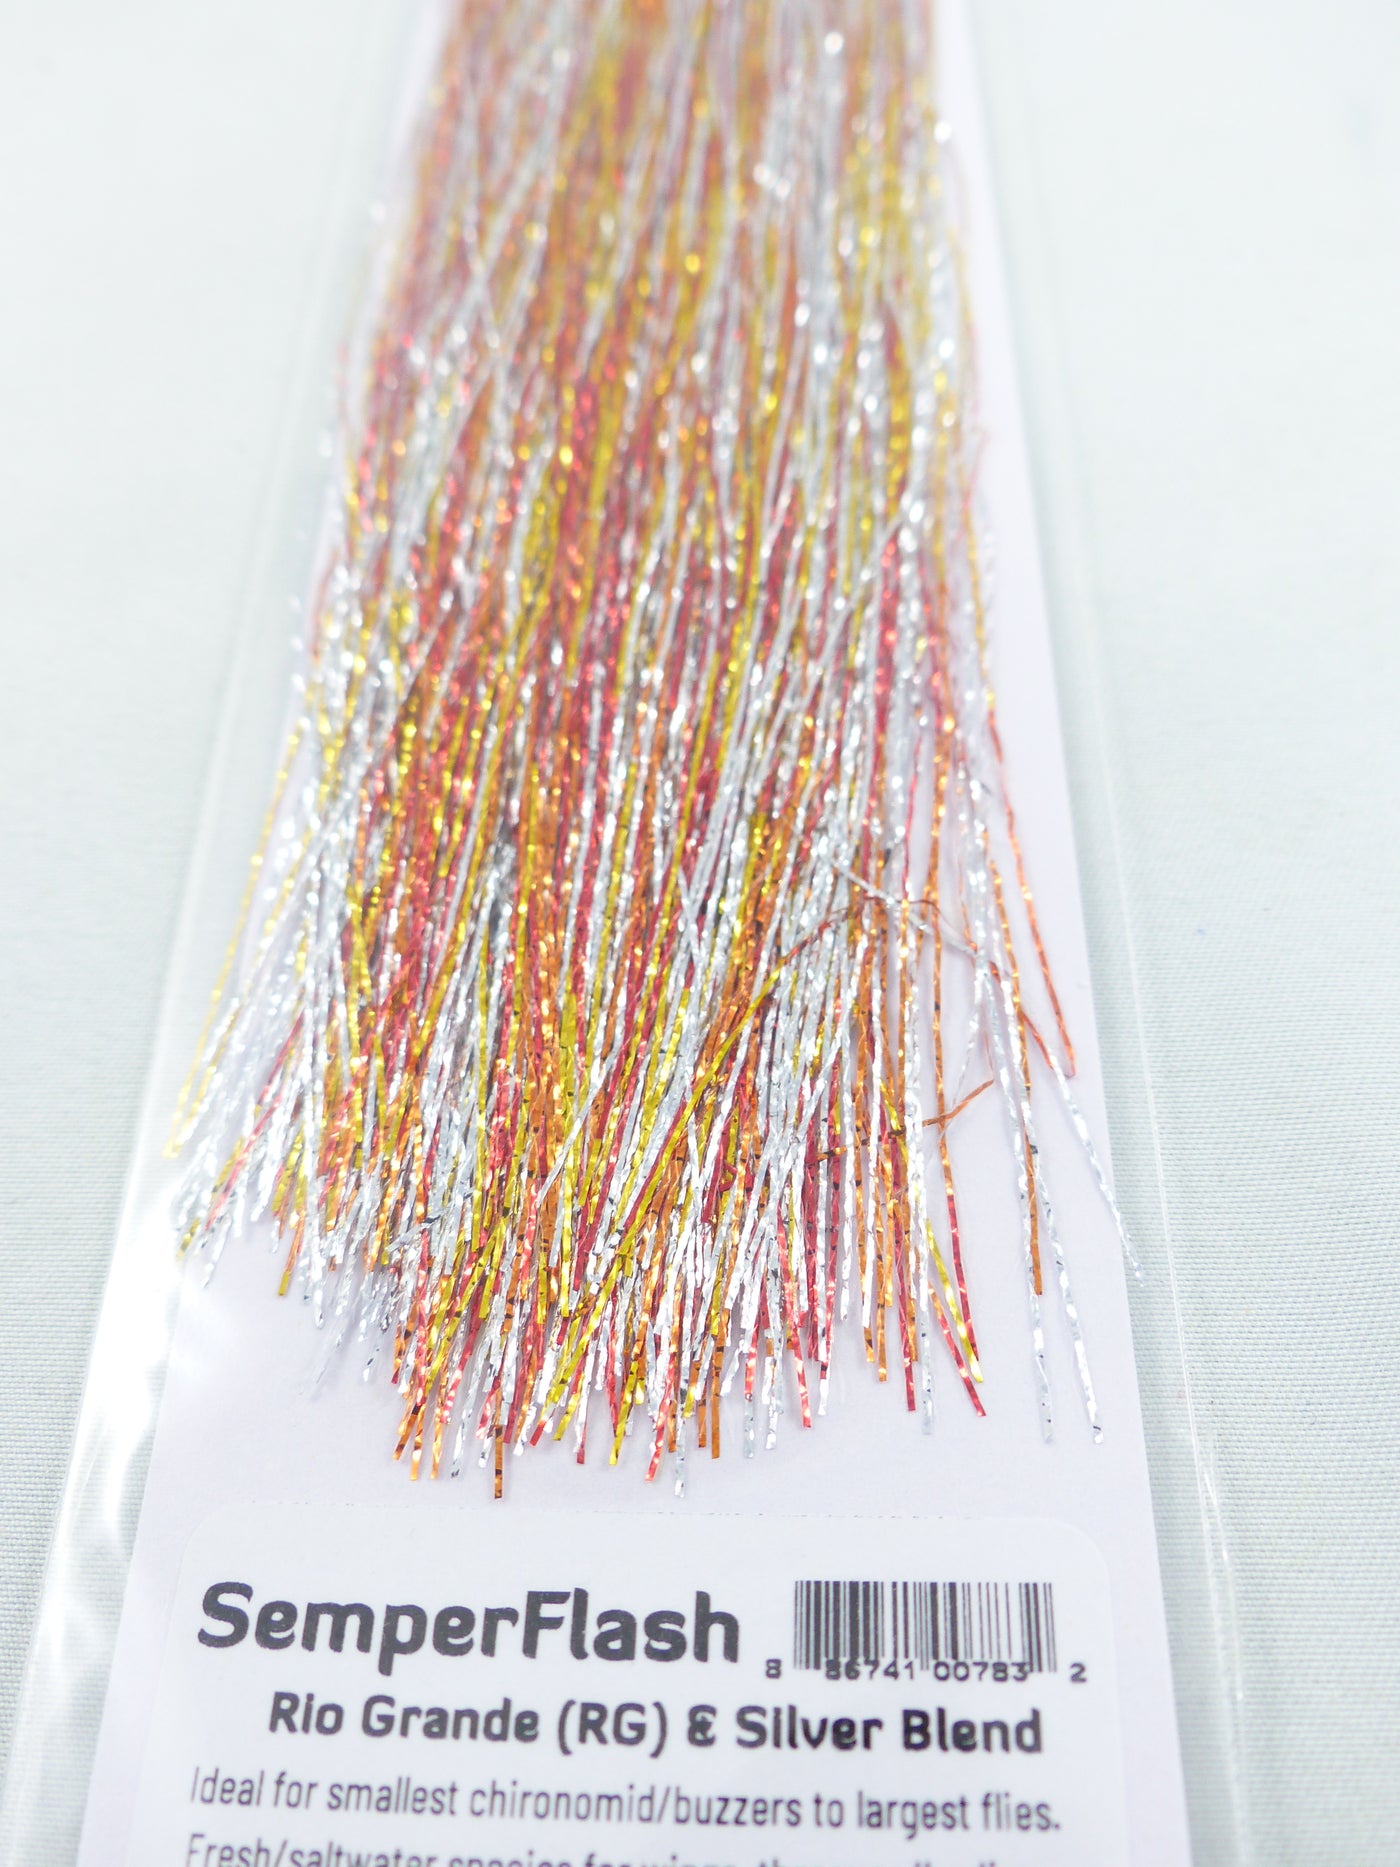 Semperfli SemperFlash mix and blend